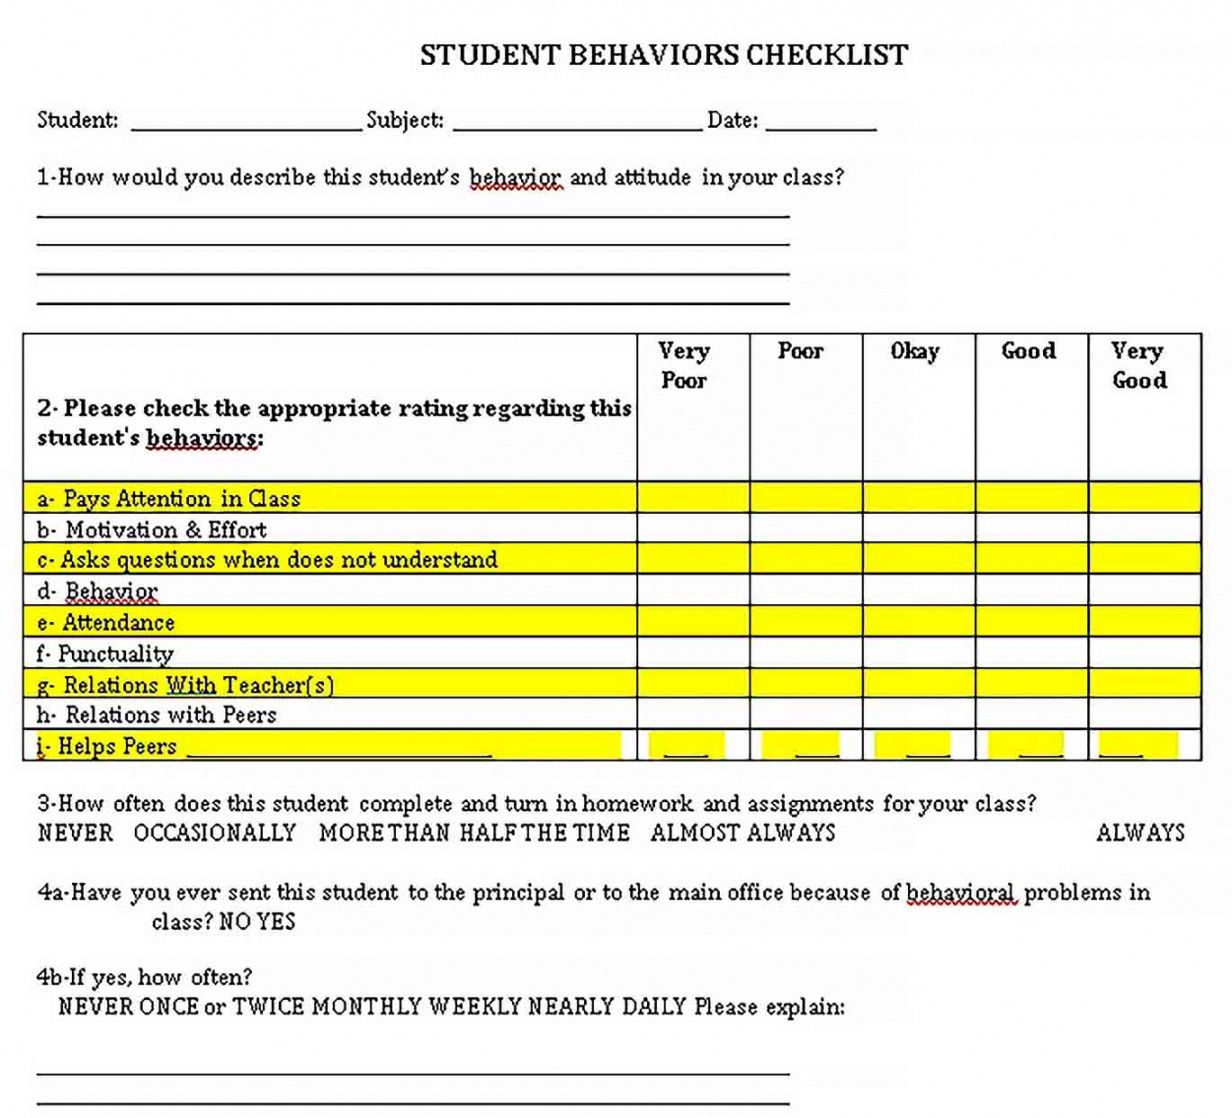 Get Our Sample Of Student Behavior Checklist Template For Free Student Behavior Checklist Template Student